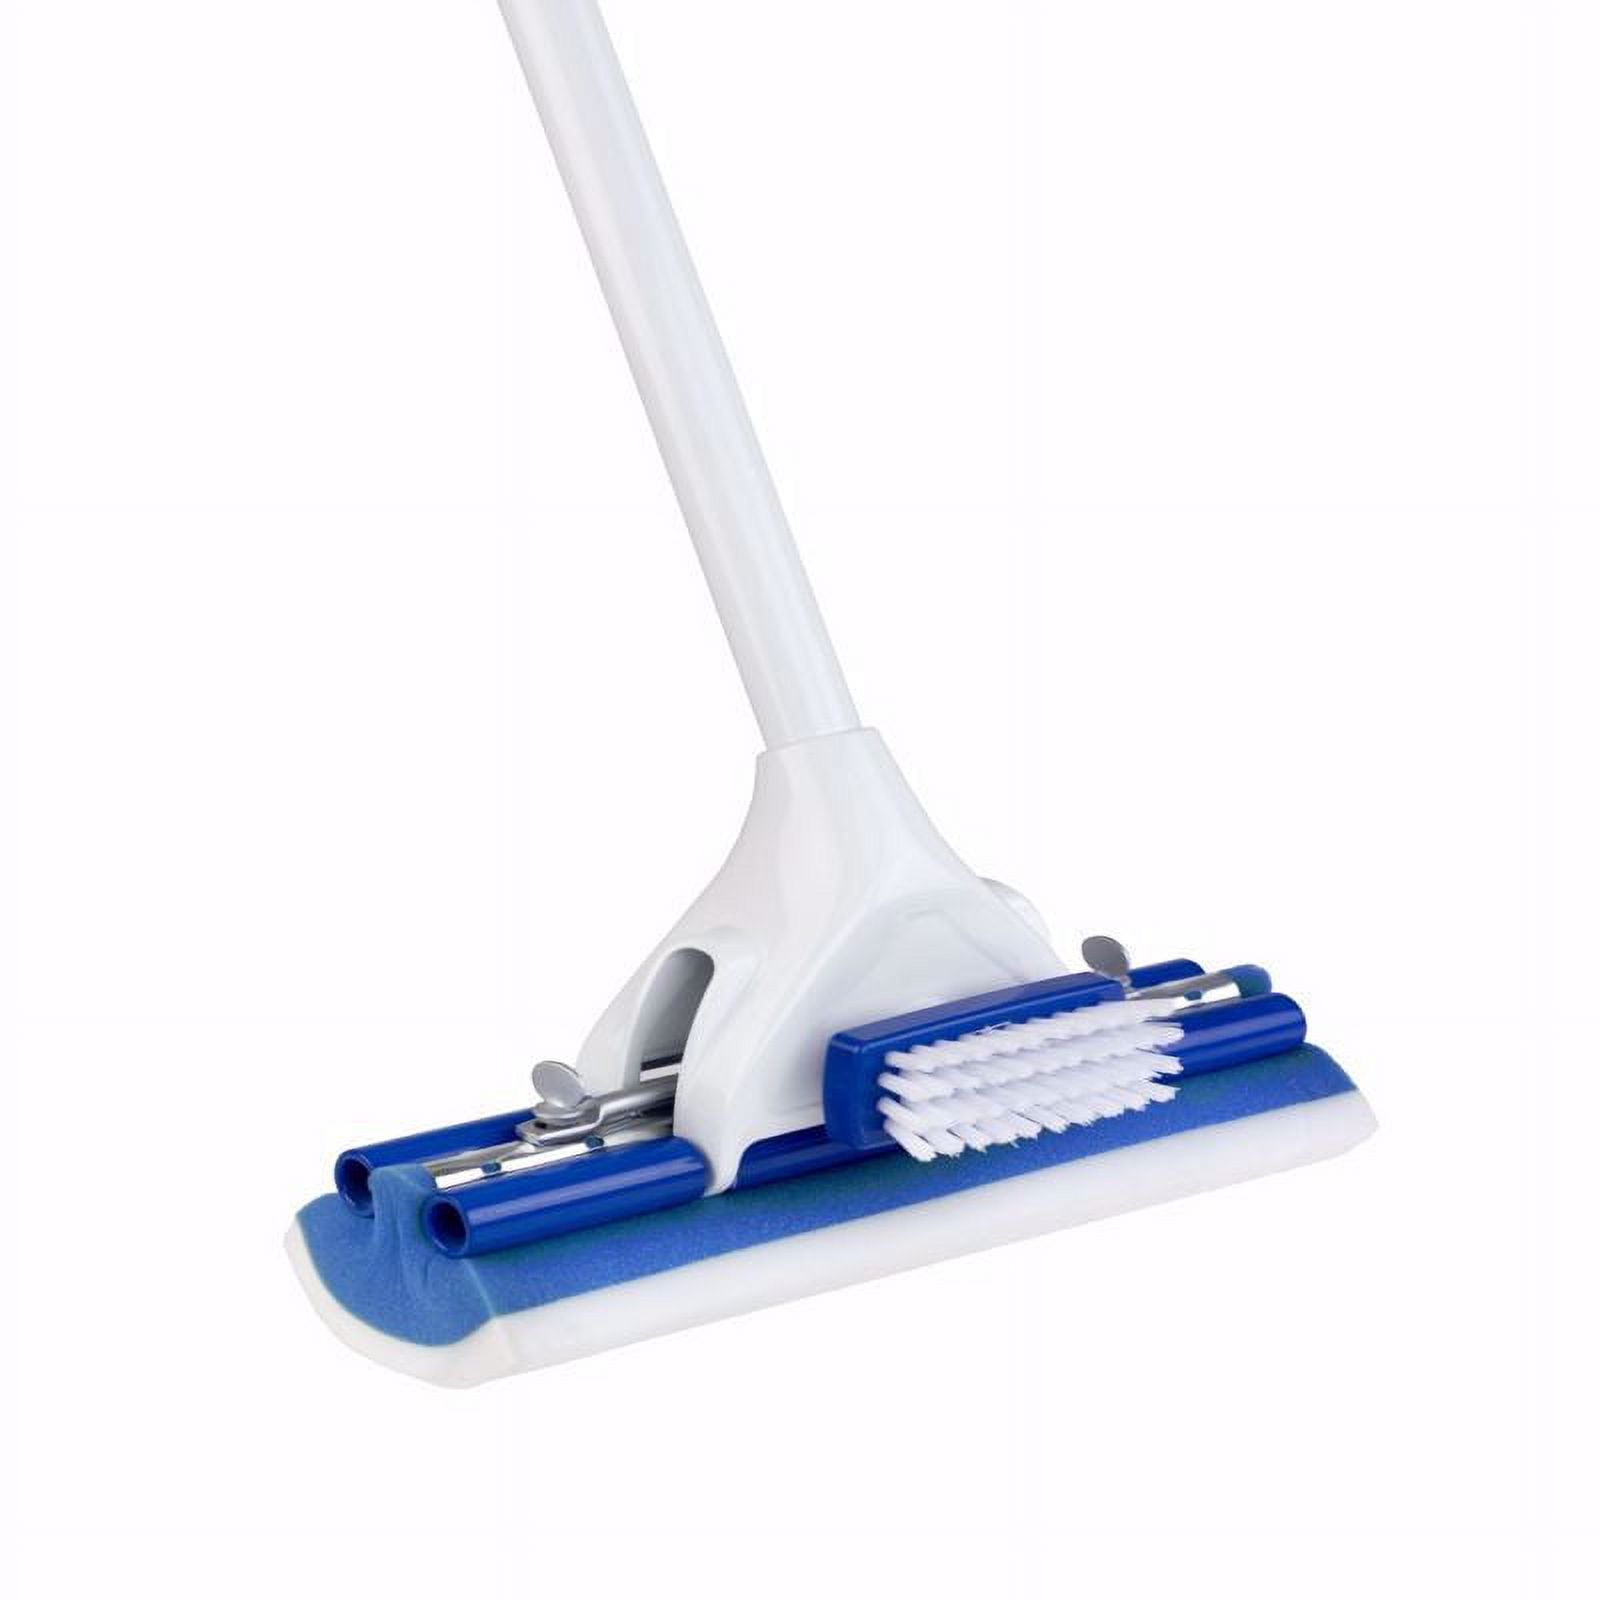 Mr. Clean Magic Eraser Roller Mop, 45" Handle, 10 1/2 x 3 Head, White/Blue - image 2 of 2